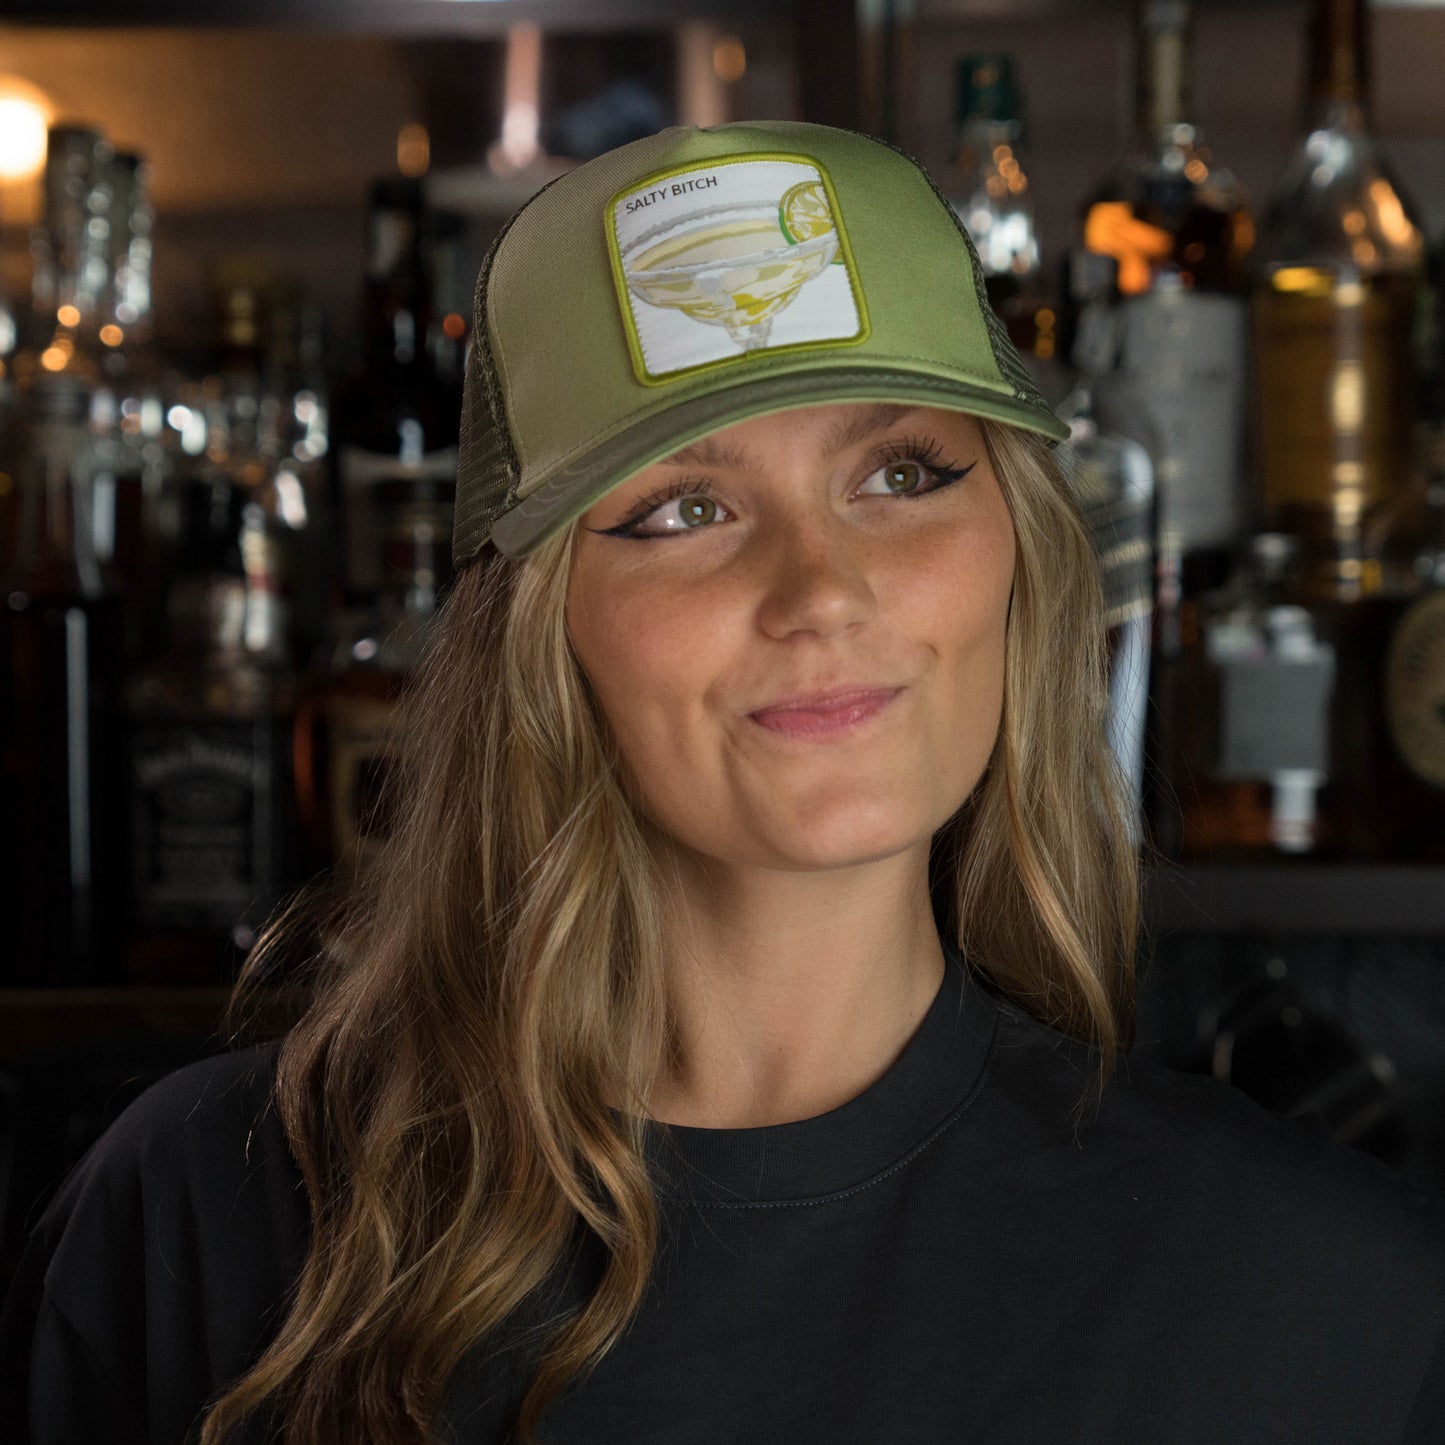 Salty Bitch Margarita Hat in Creps al Born by Broken Bartender